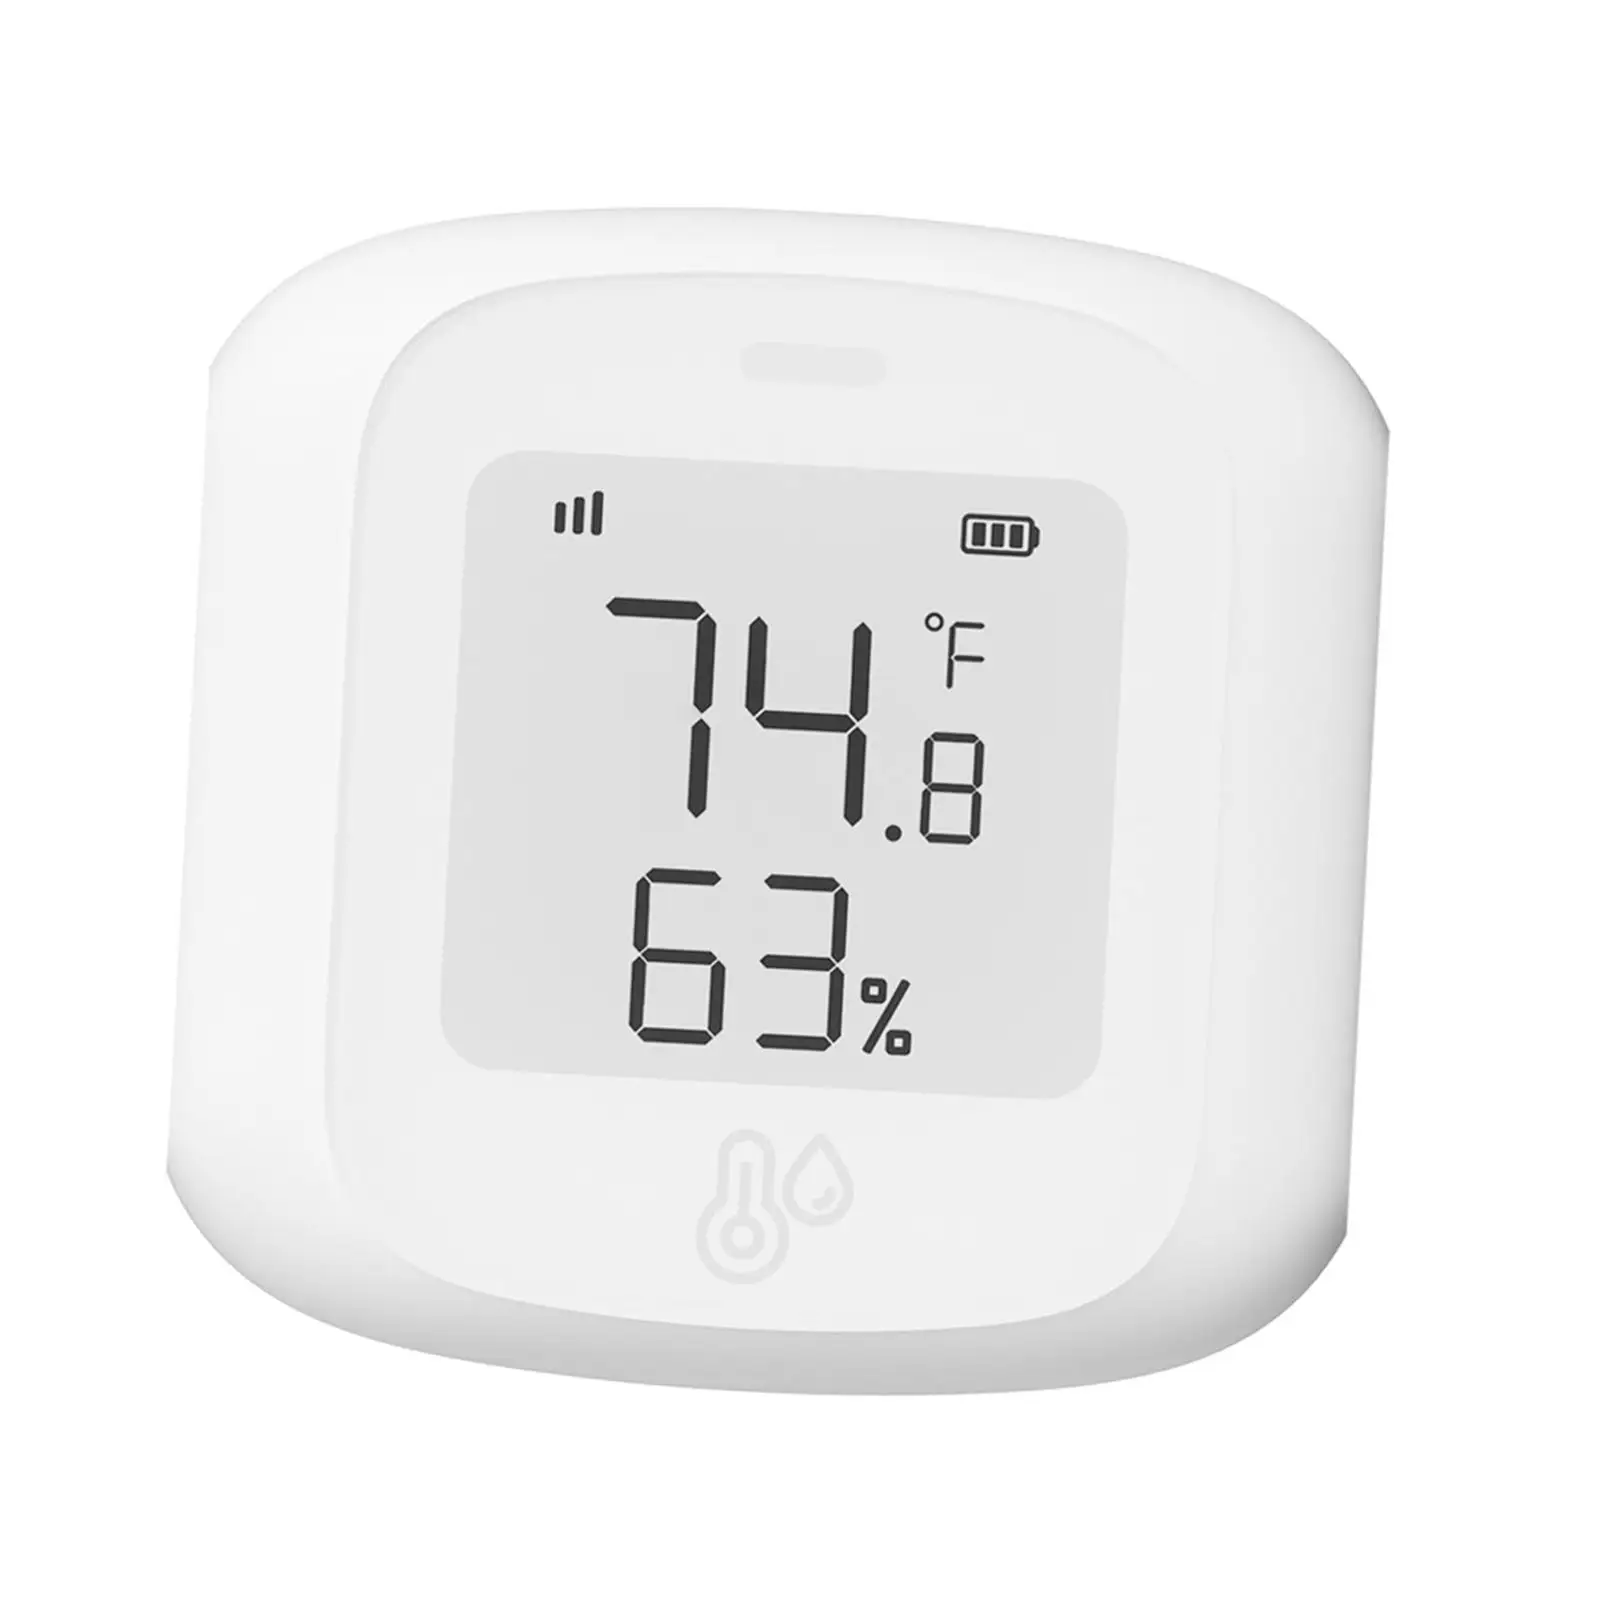 Outdoor Indoor Thermometer Compact High Precision Smart Temperature Humidity for Warehouse Office Garden Refrigerator Door Pools